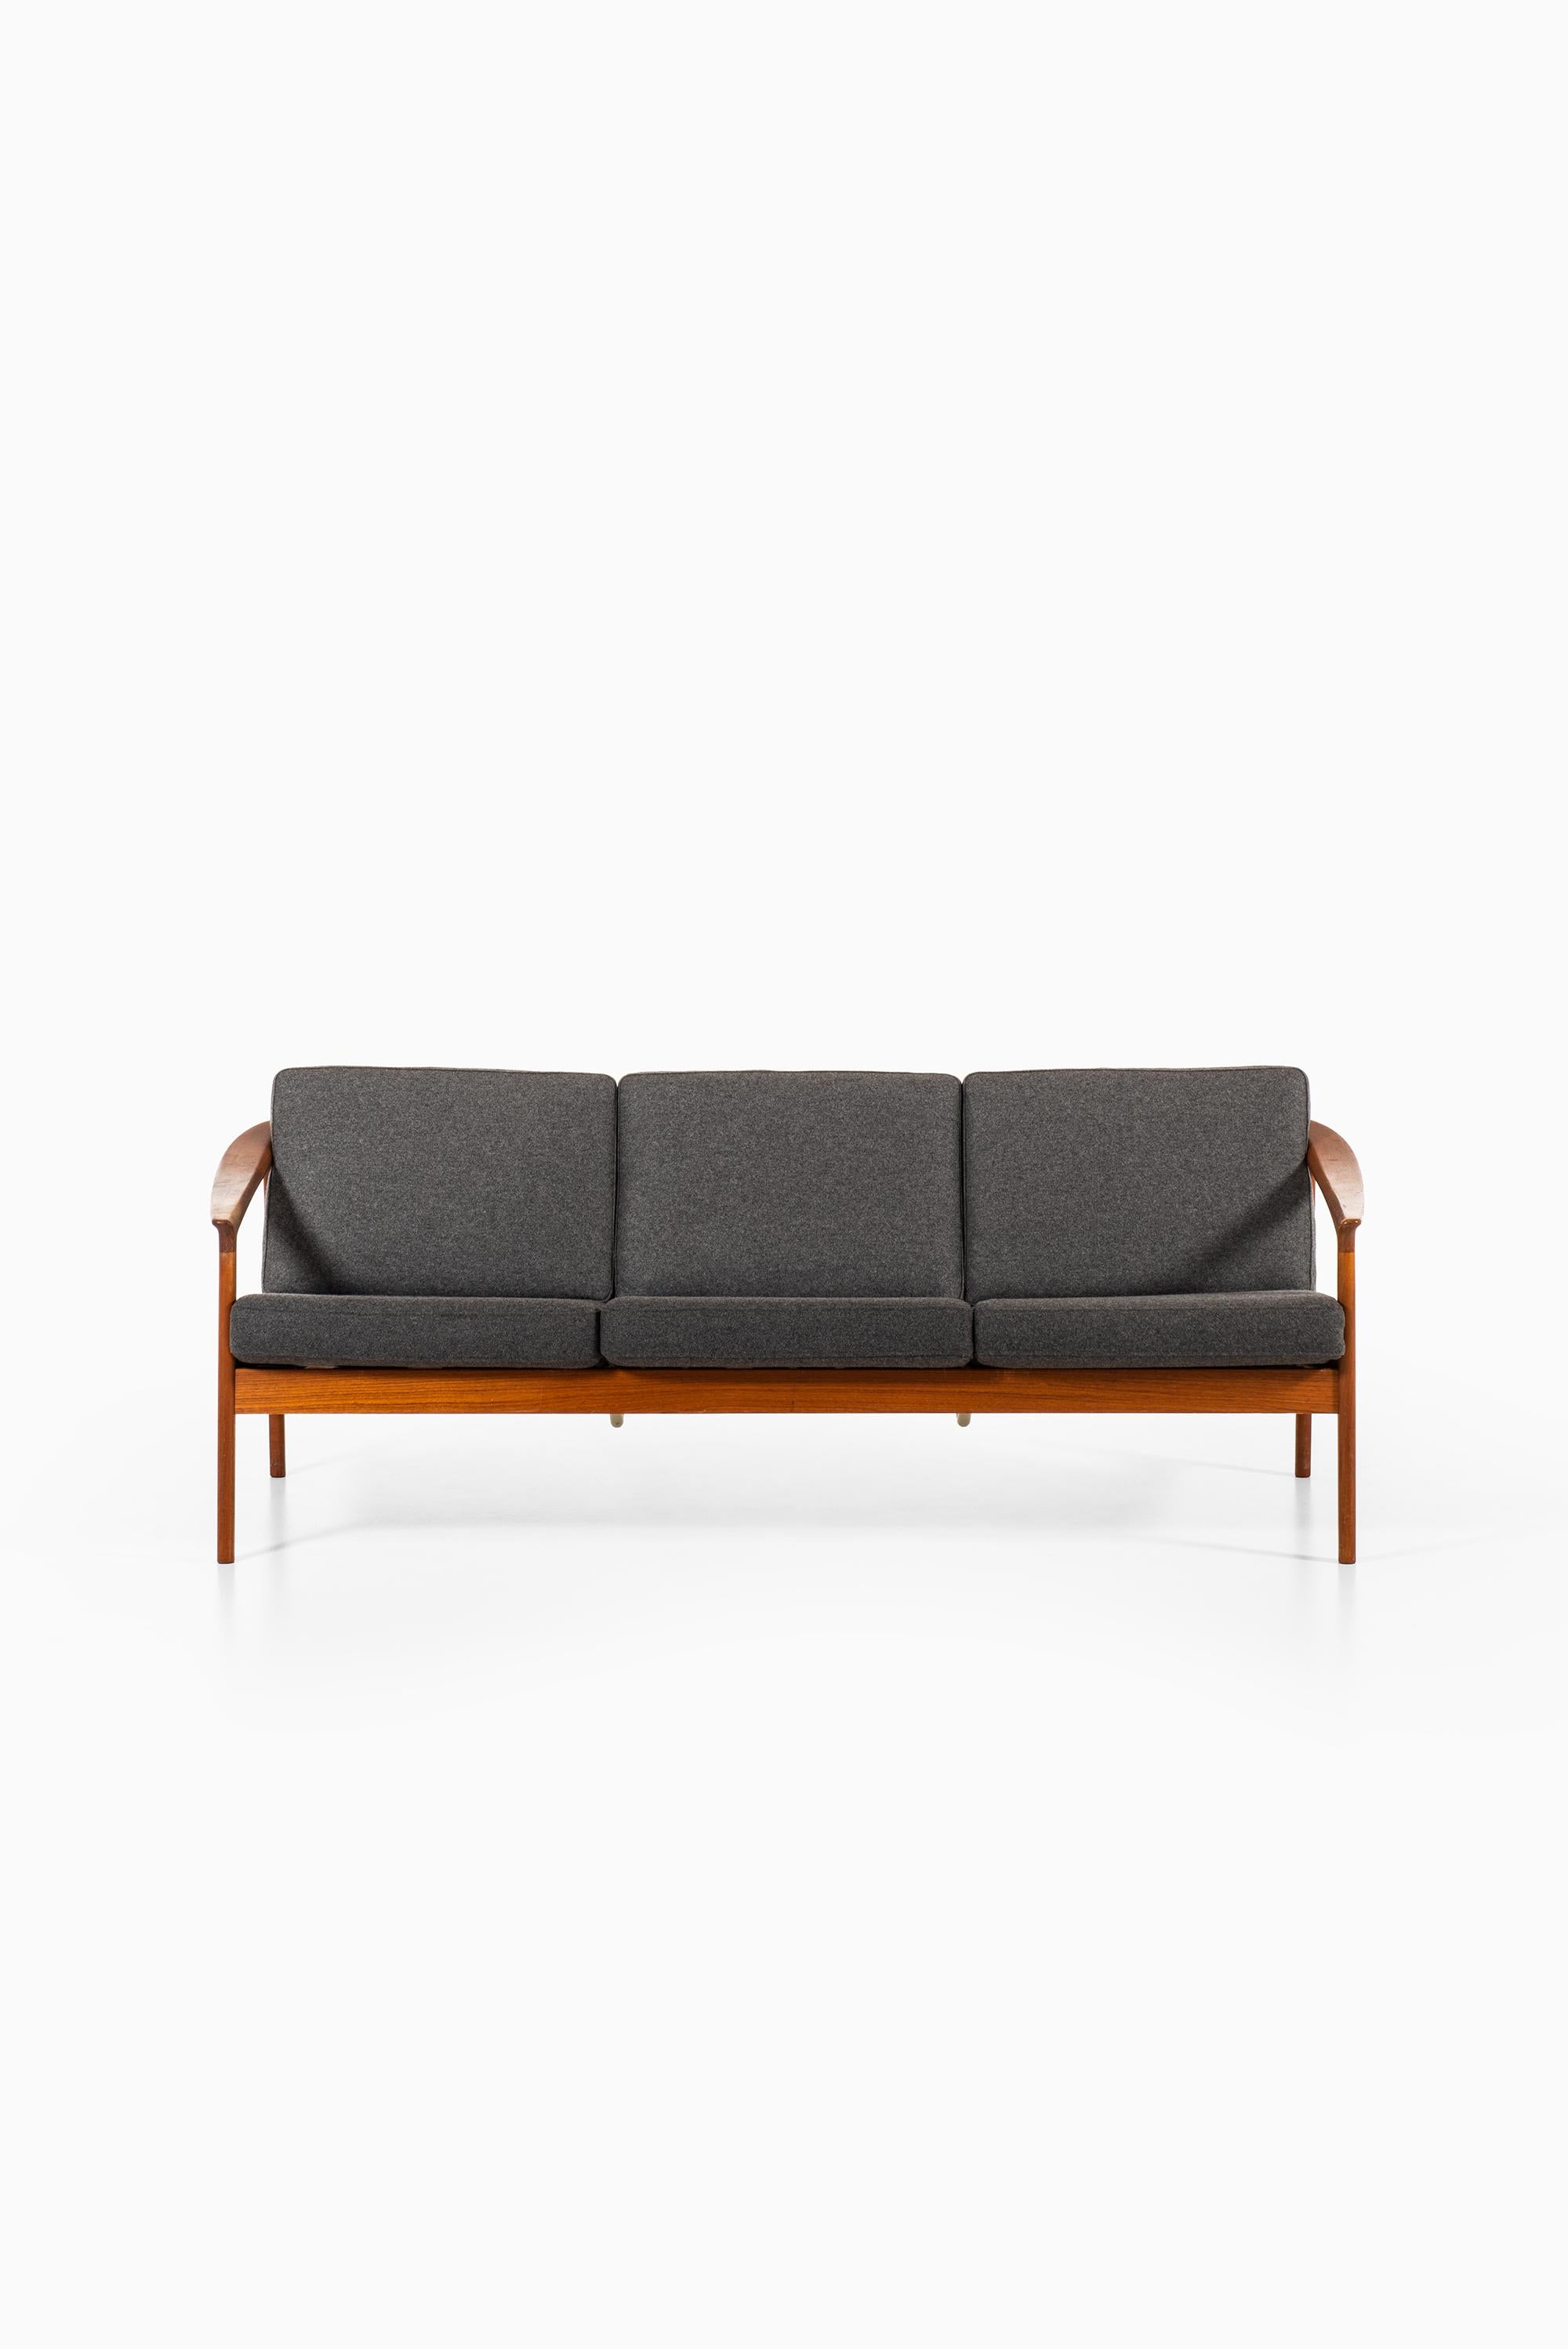 Sofa model Colorado designed by Folke Ohlsson. Produced by Bodafors in Sweden.